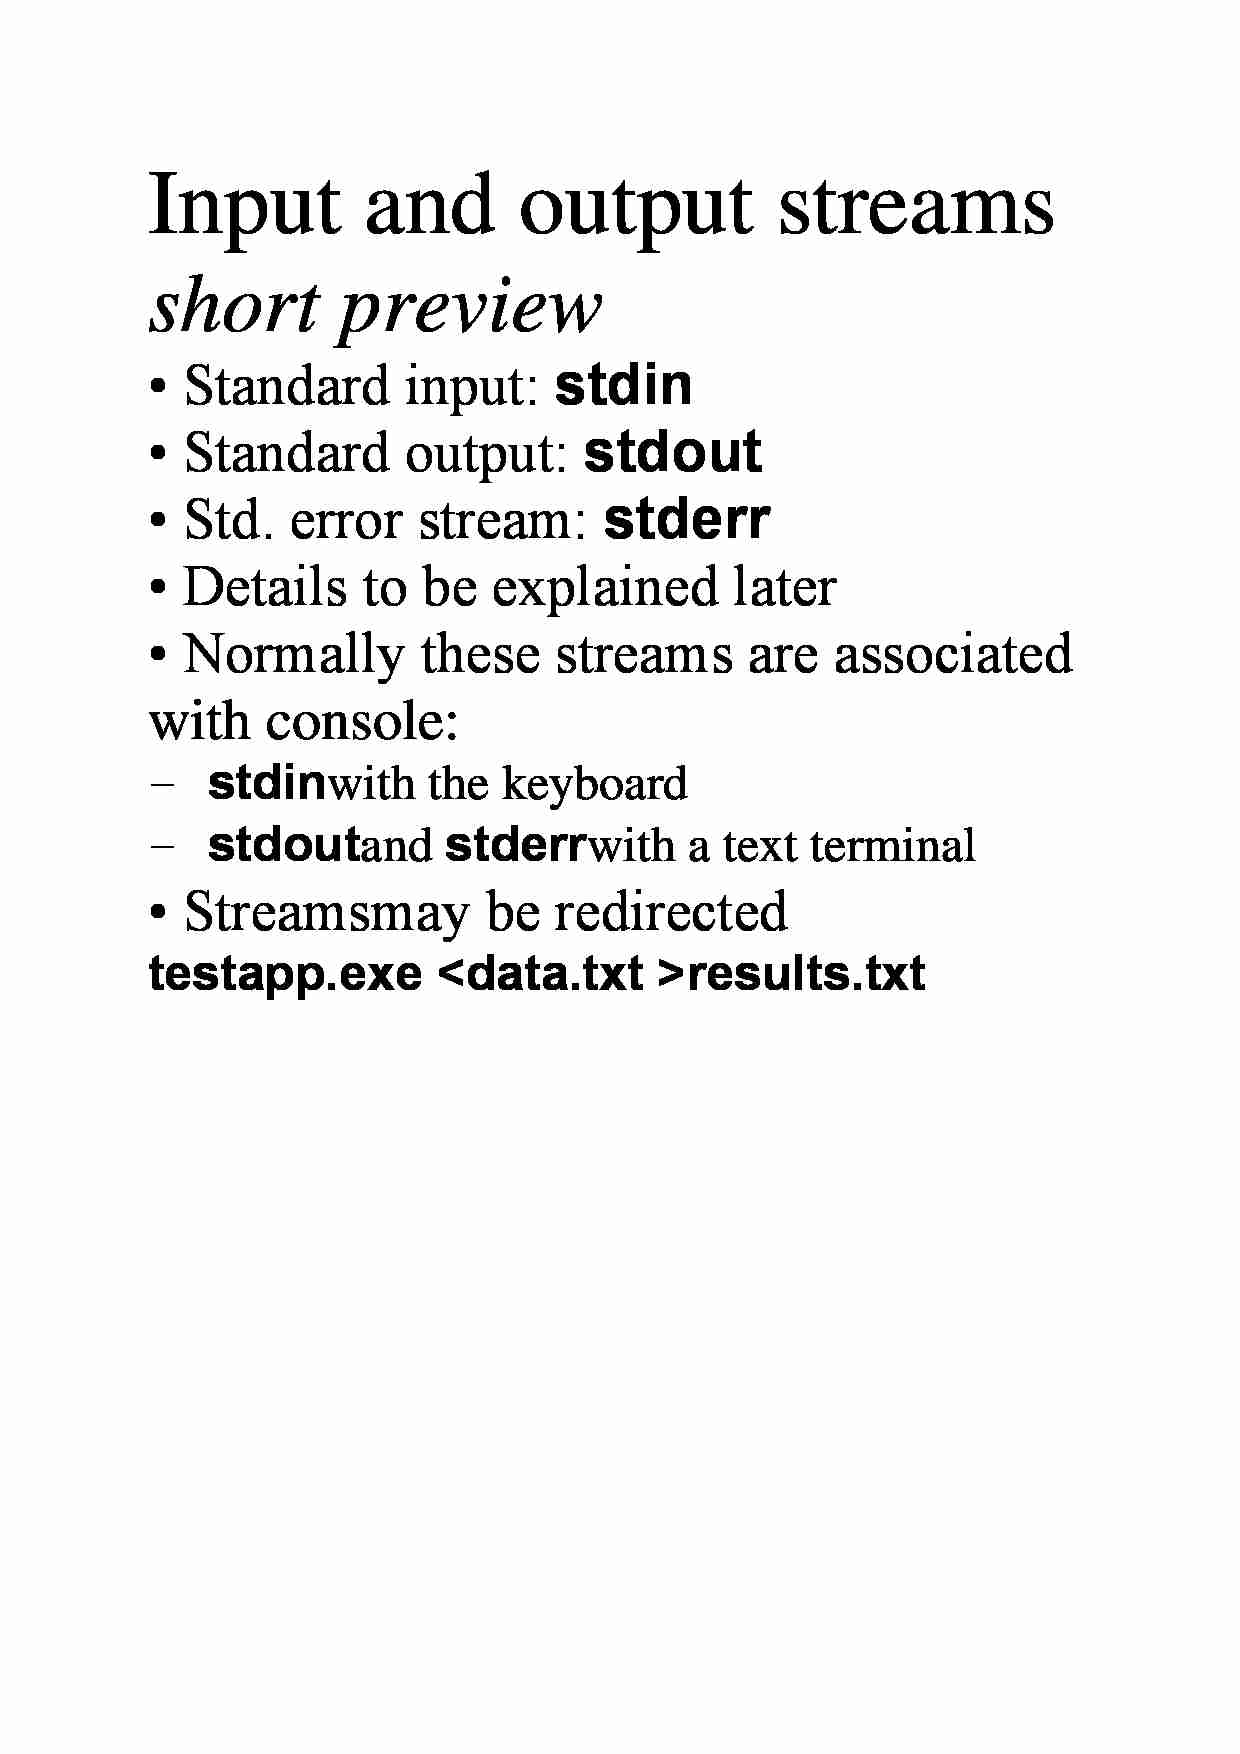 Input and output streams - strona 1